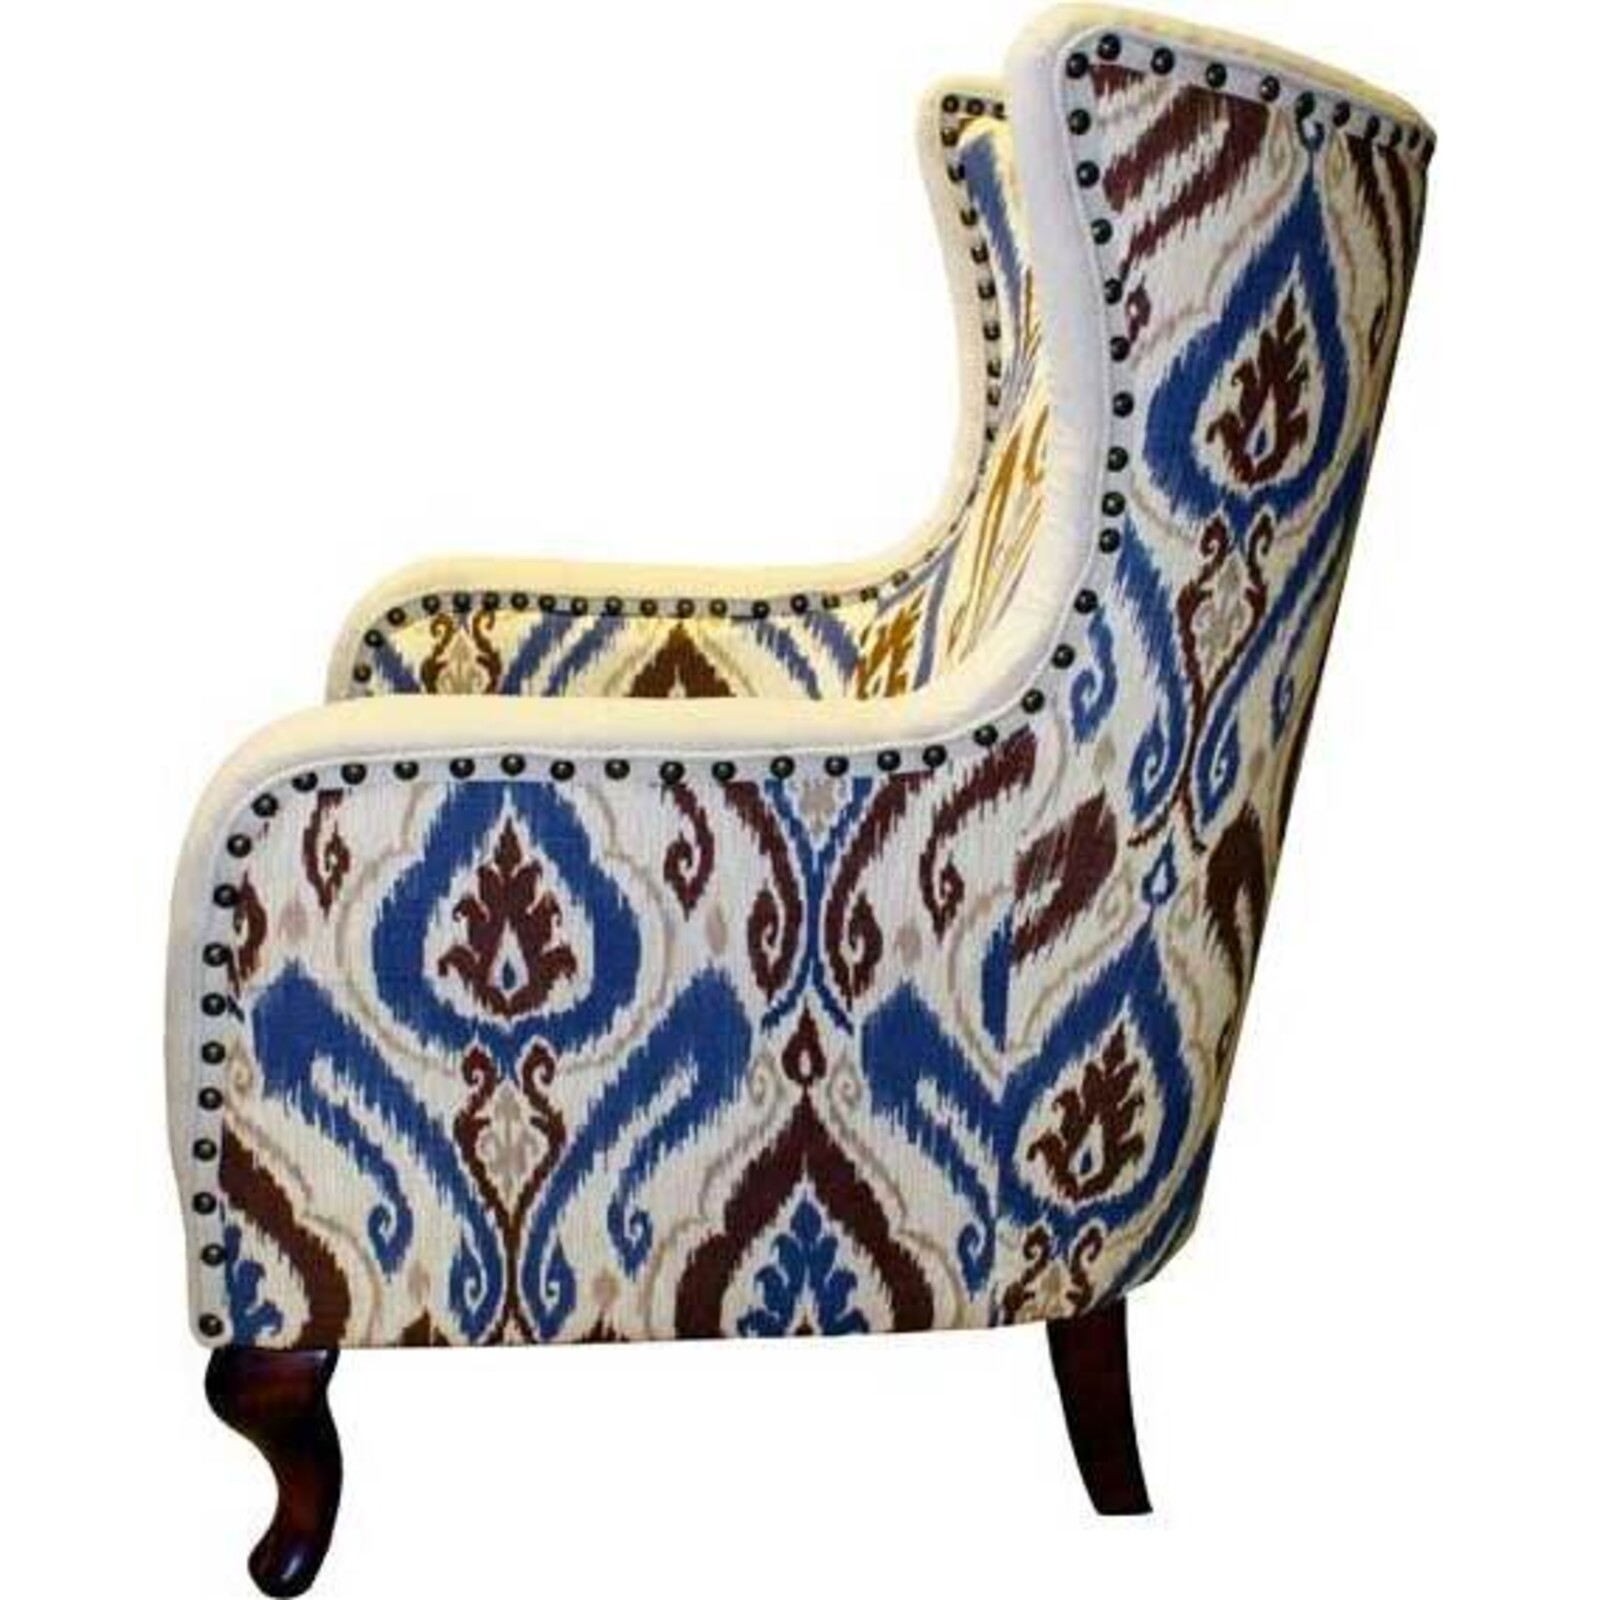 Chair - Studded Ikat ex trade fair item